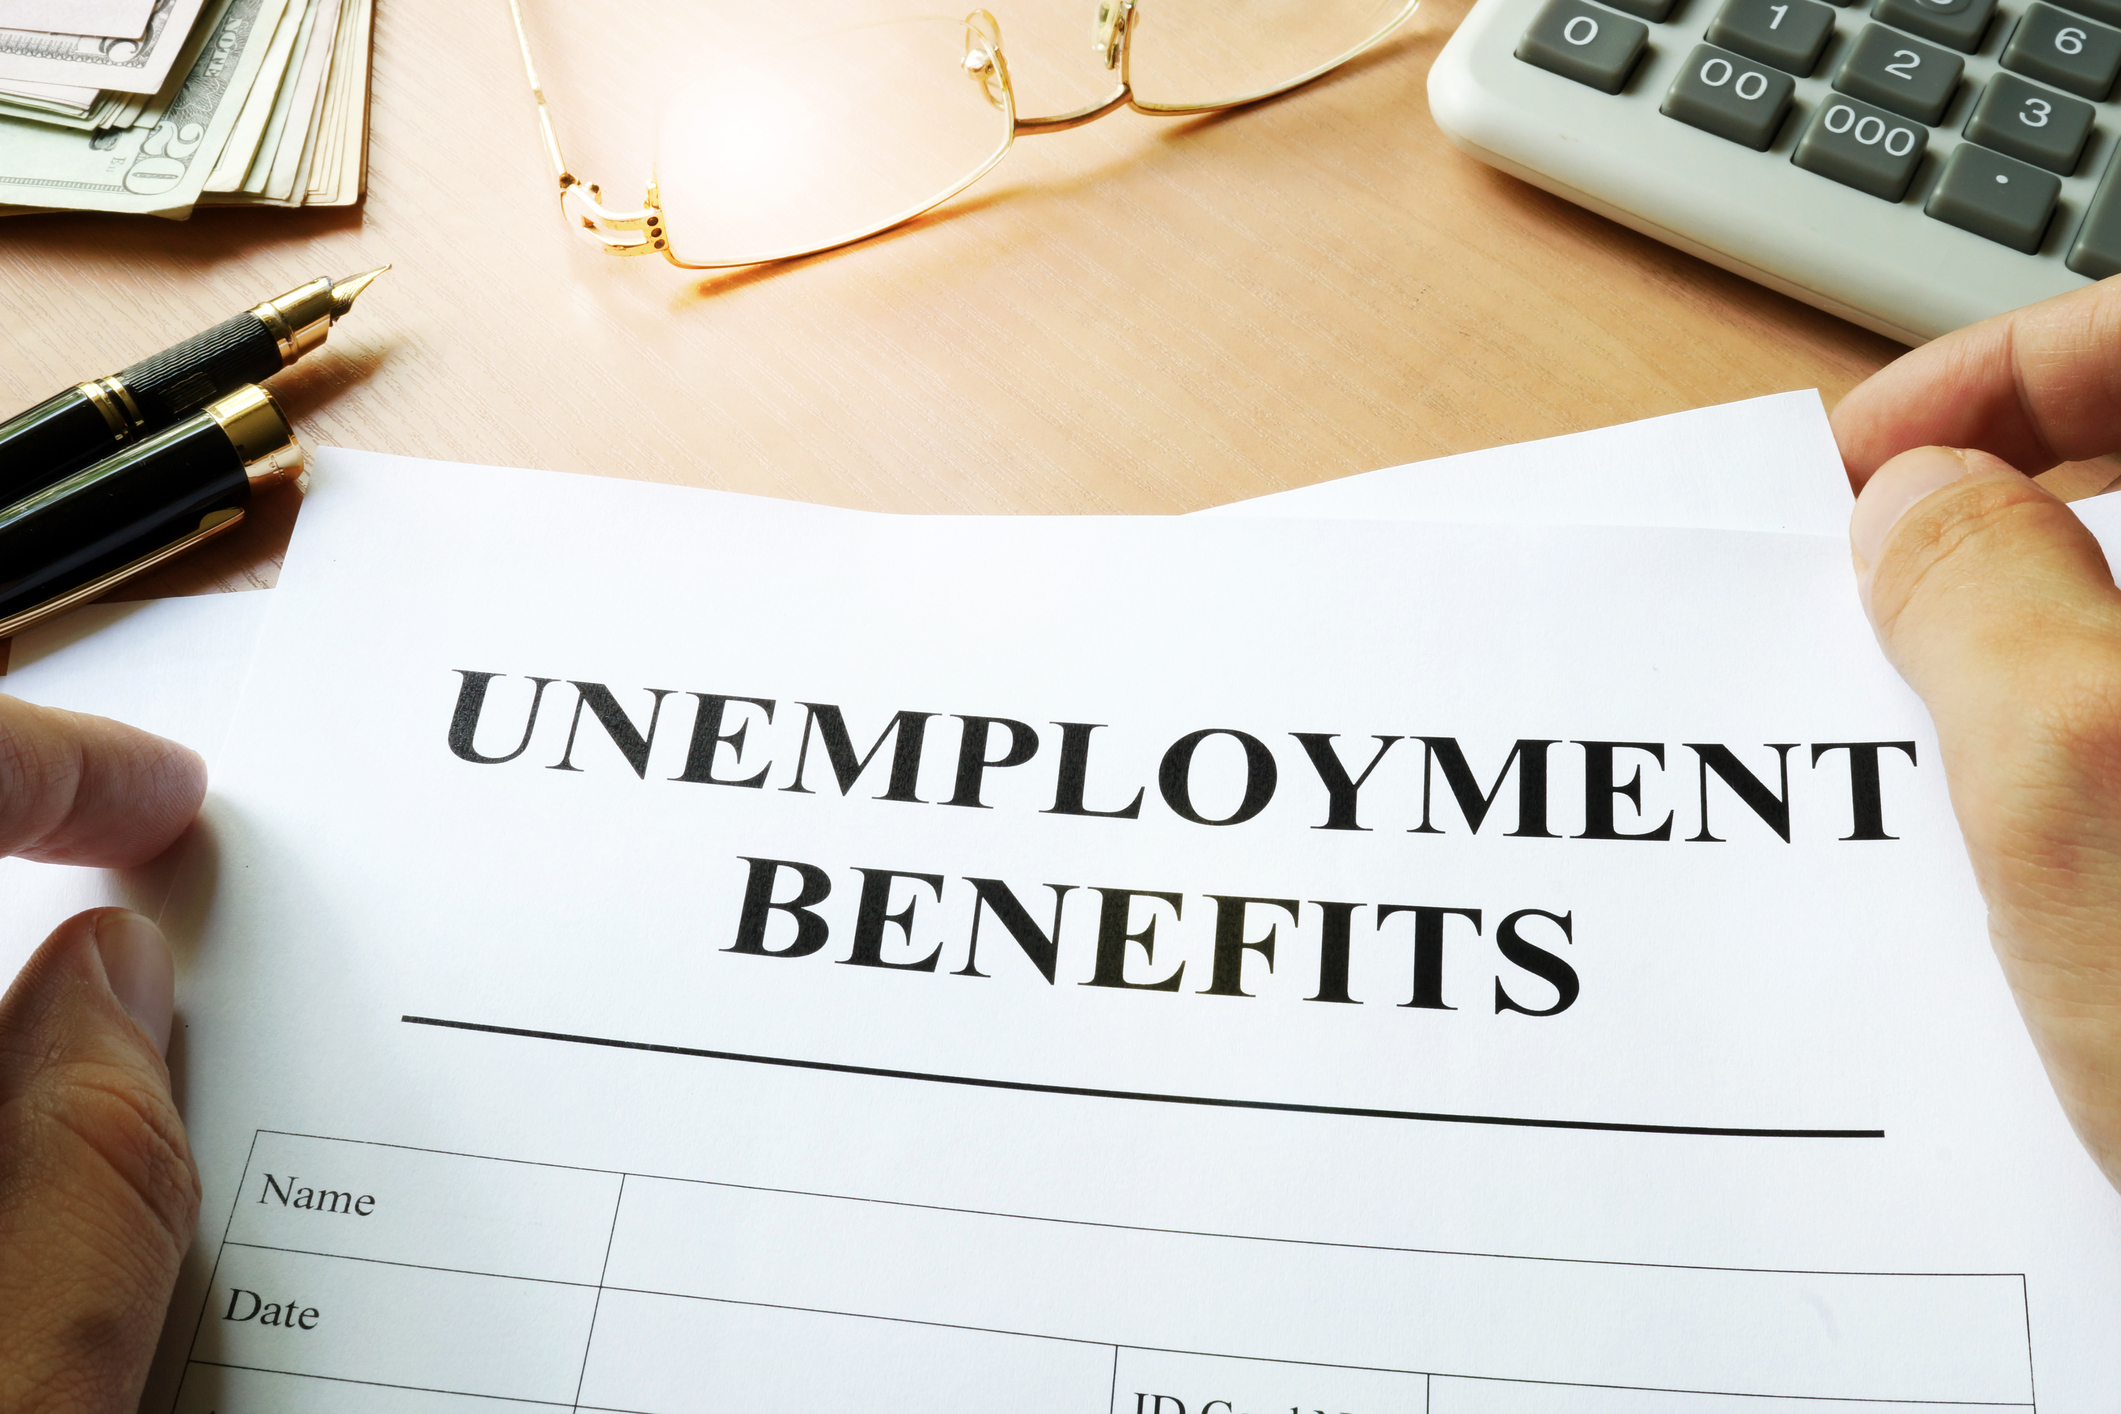 Factors Affecting Unemployment Insurance Trust Fund Solvency